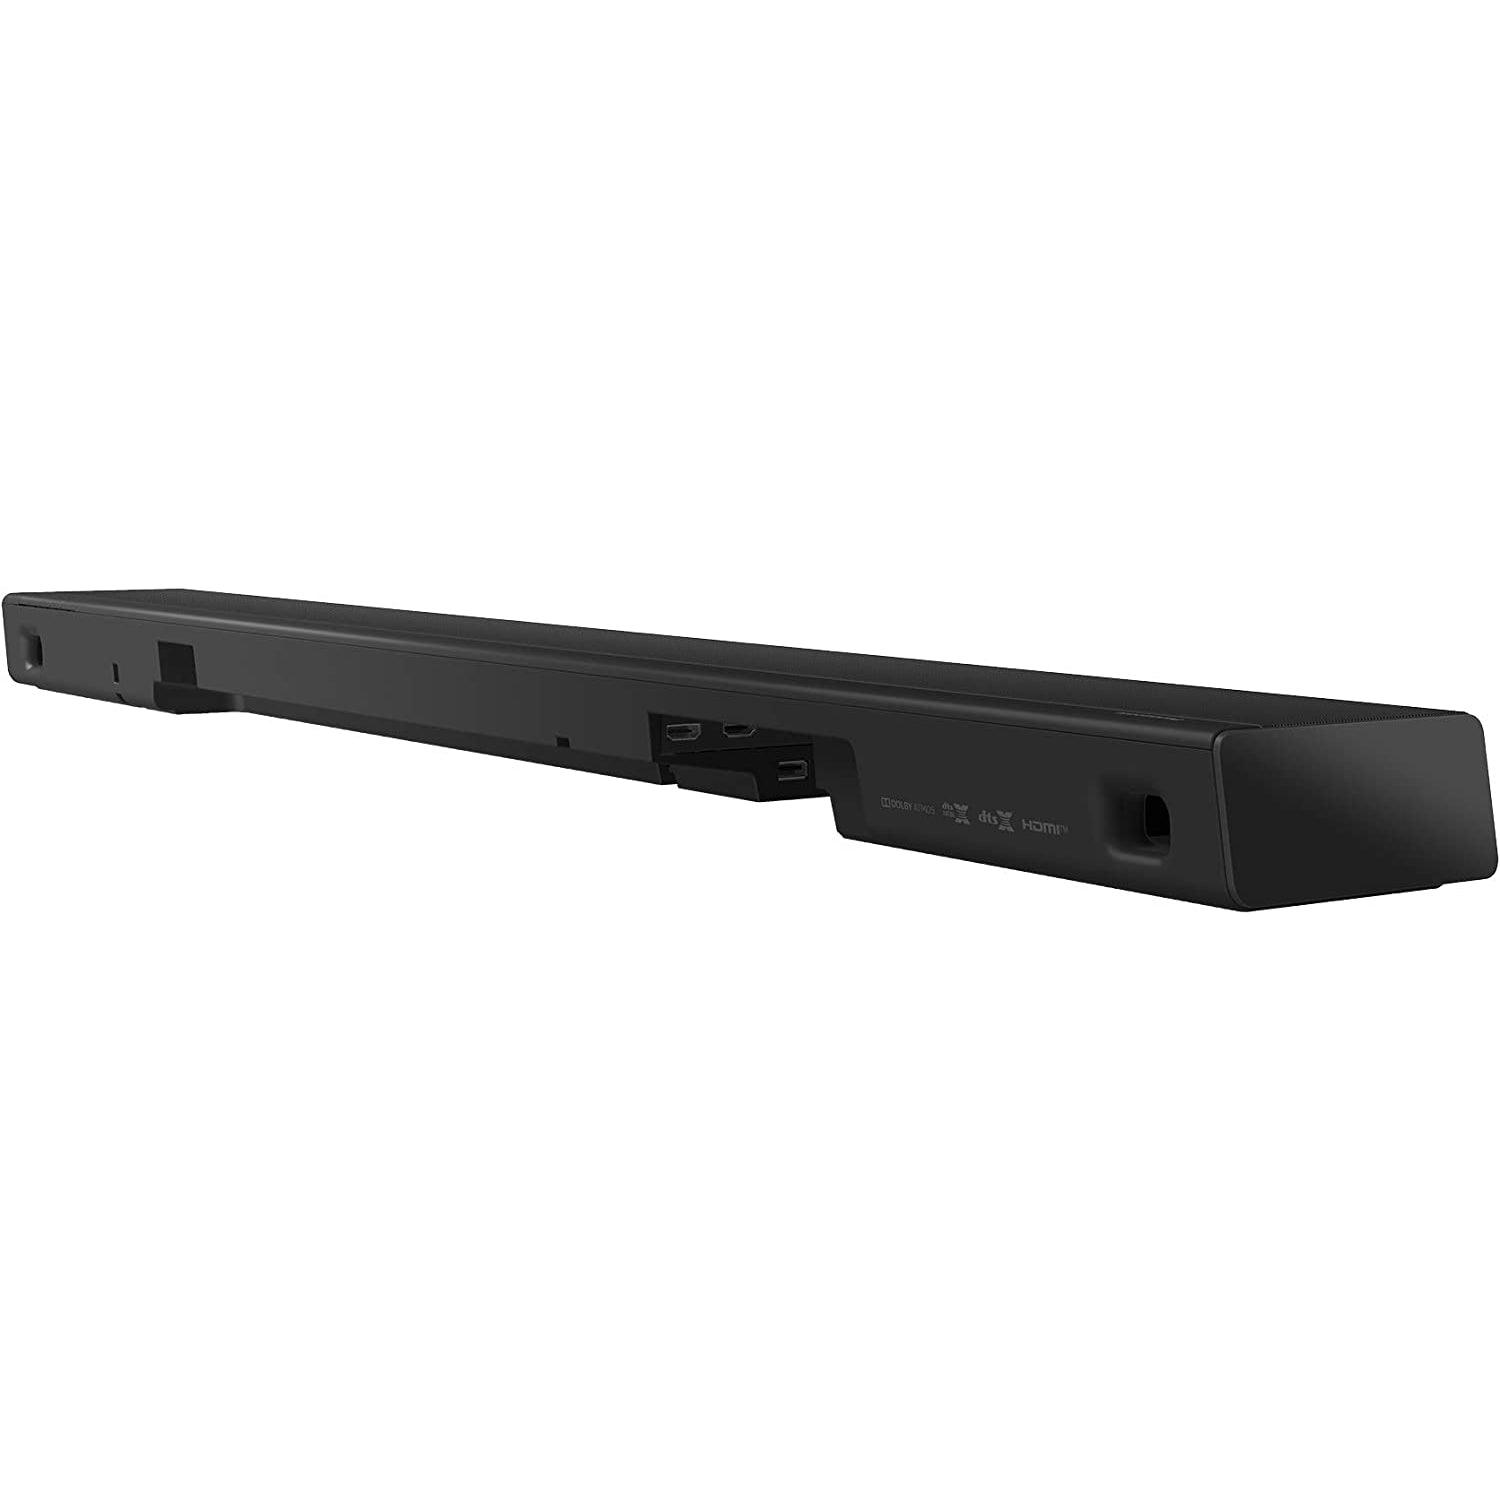 Panasonic SC-HTB600 Soundbar with Speaker - Black - New